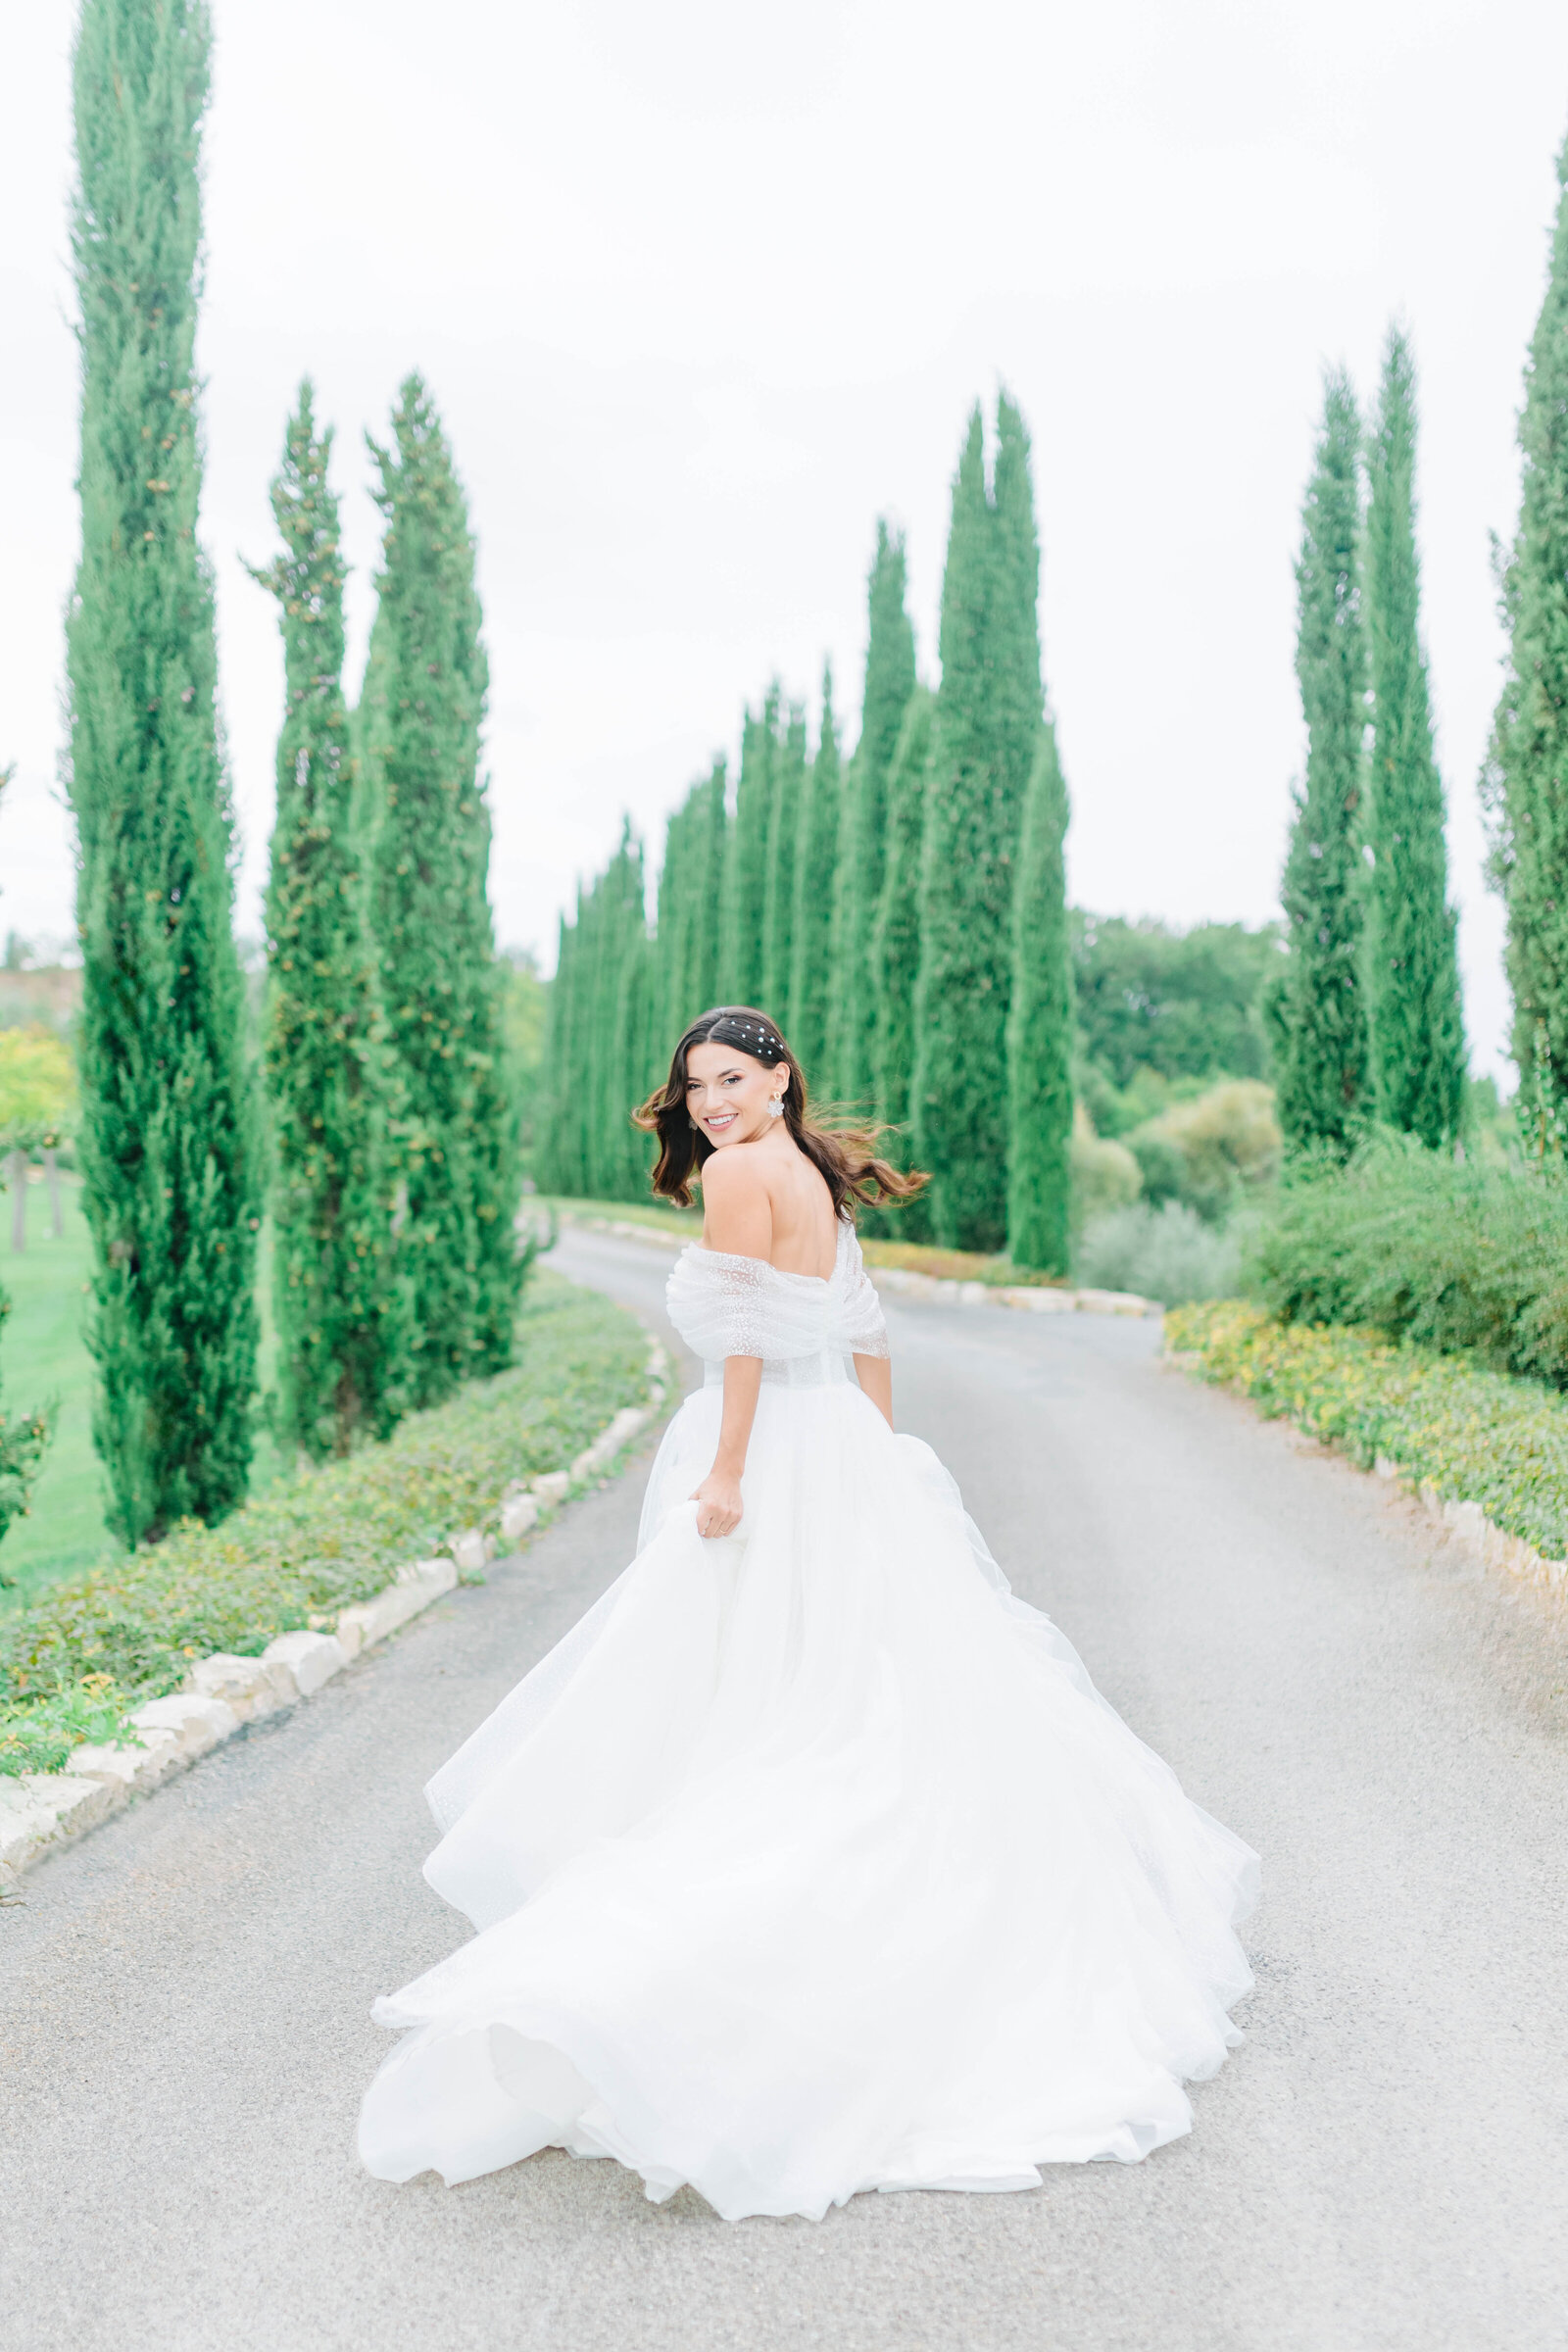 MorganeBallPhotography-Wedding-Tuscany-TheClubHouse-LovelyInstants-03-WeddingCeremony-bride-lq-111-